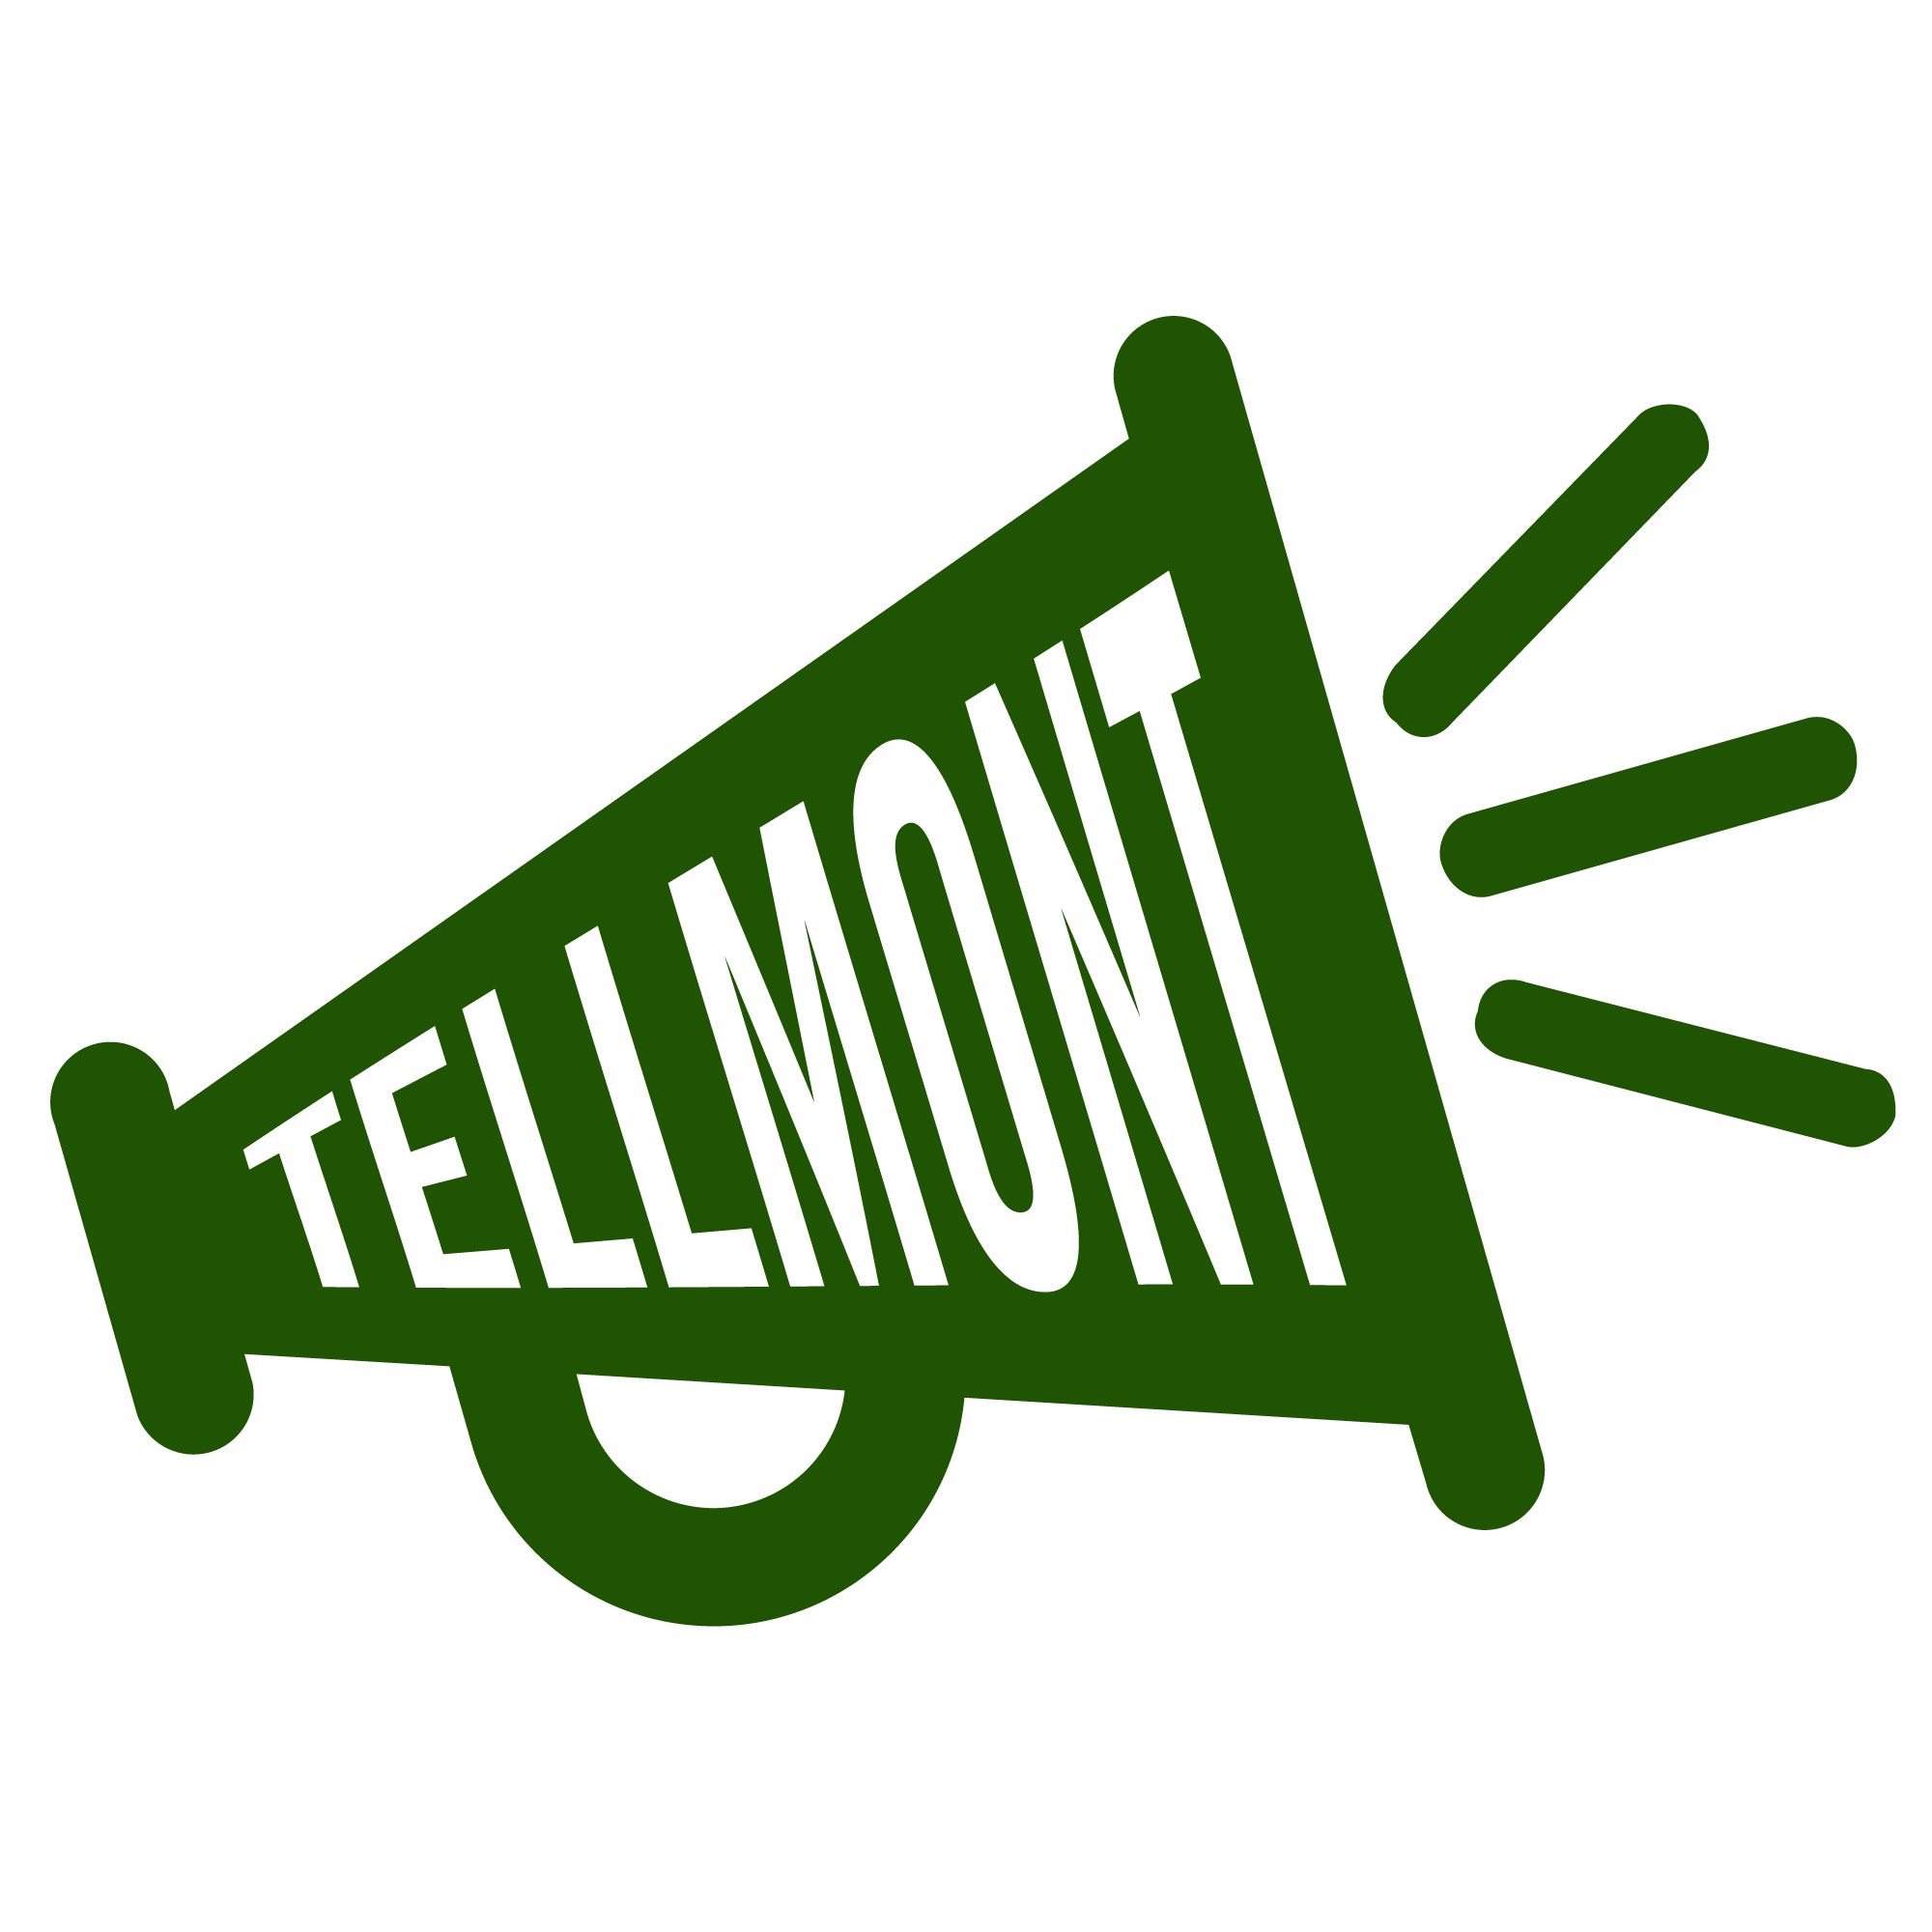 Tellmont - Episode 71 - "Hamilton Derangement Syndrome" - July 17th, 2020